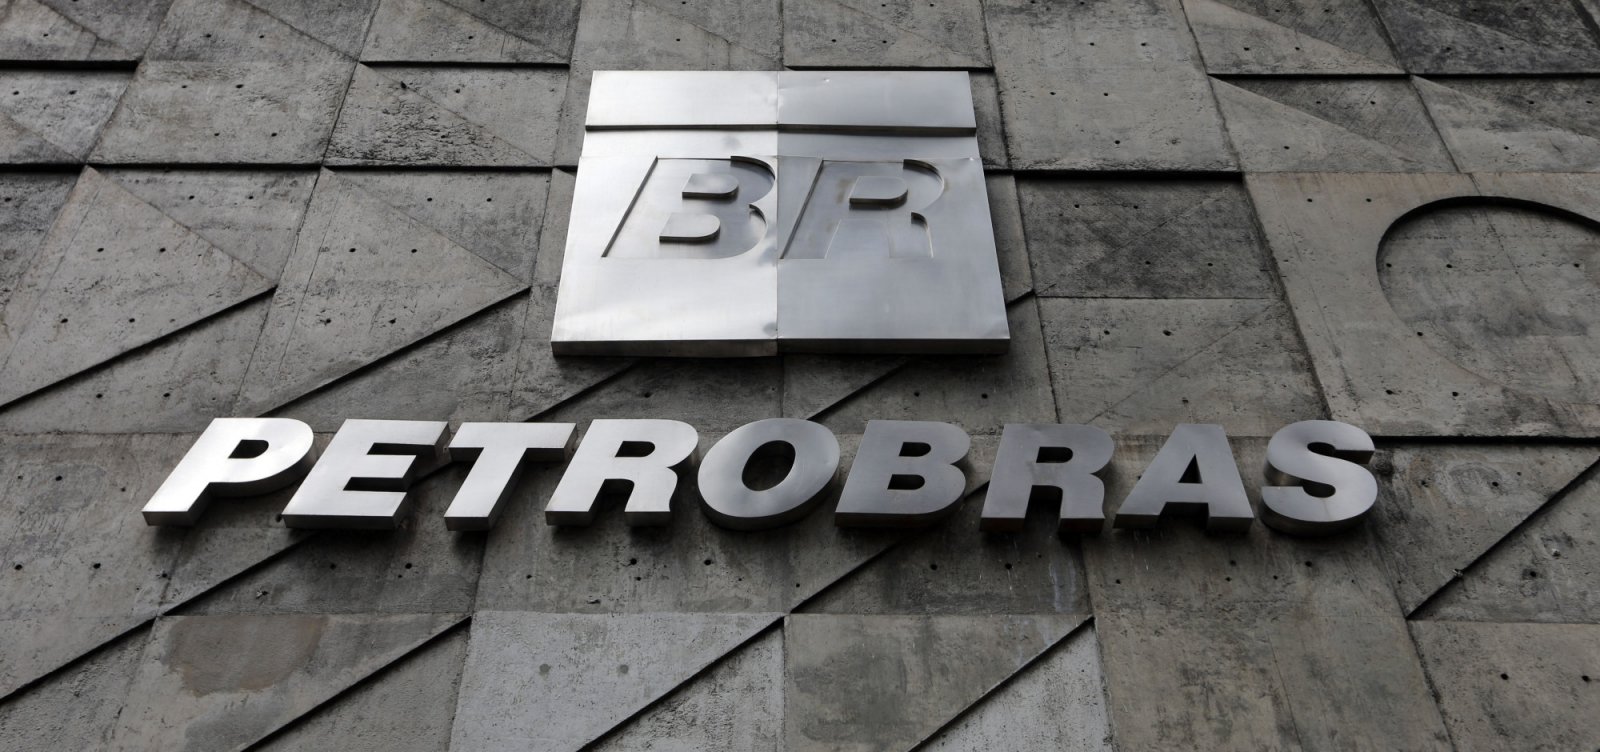 Petrobras anuncia venda de oito refinarias, incluindo a Landulpho Alves